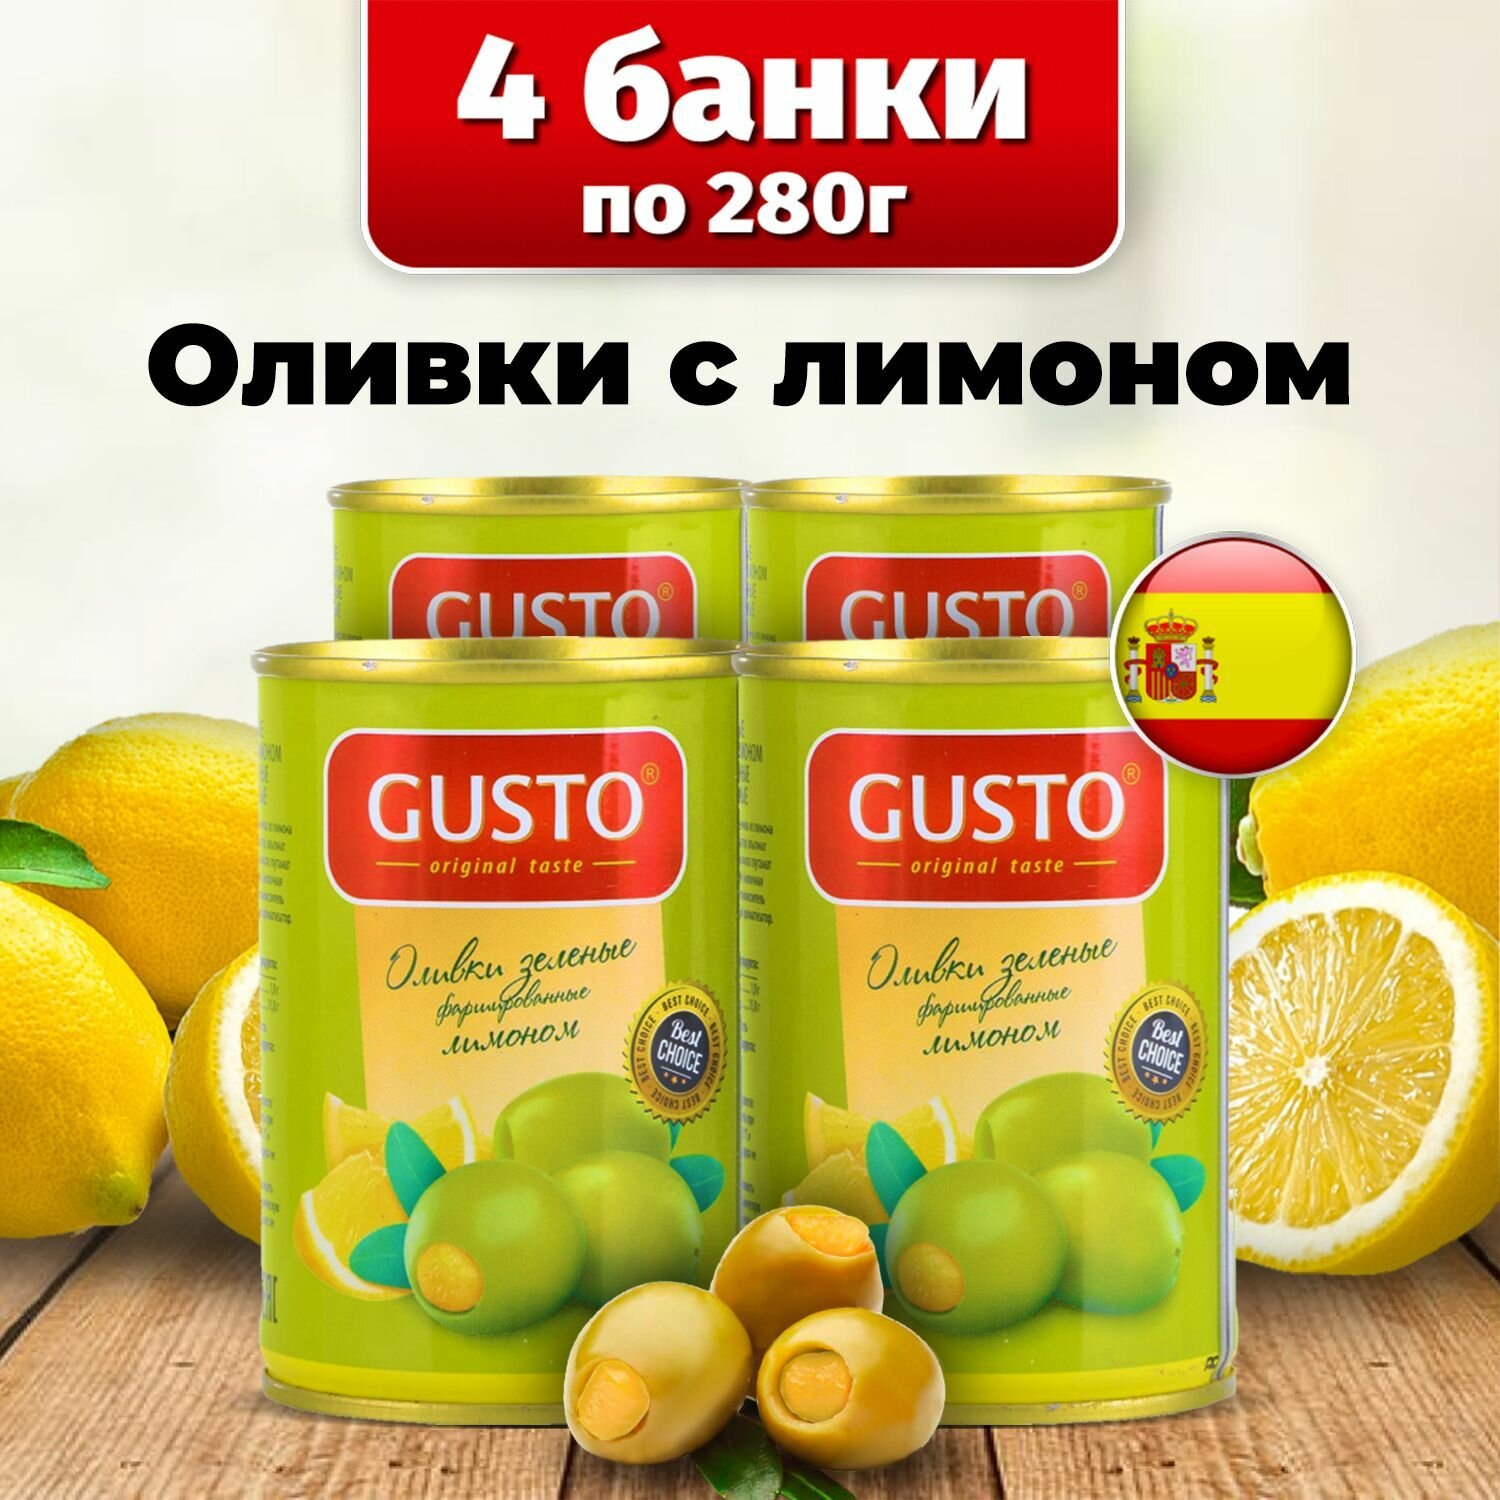 Gusto Оливки без косточек с лимоном Gusto 4 банки